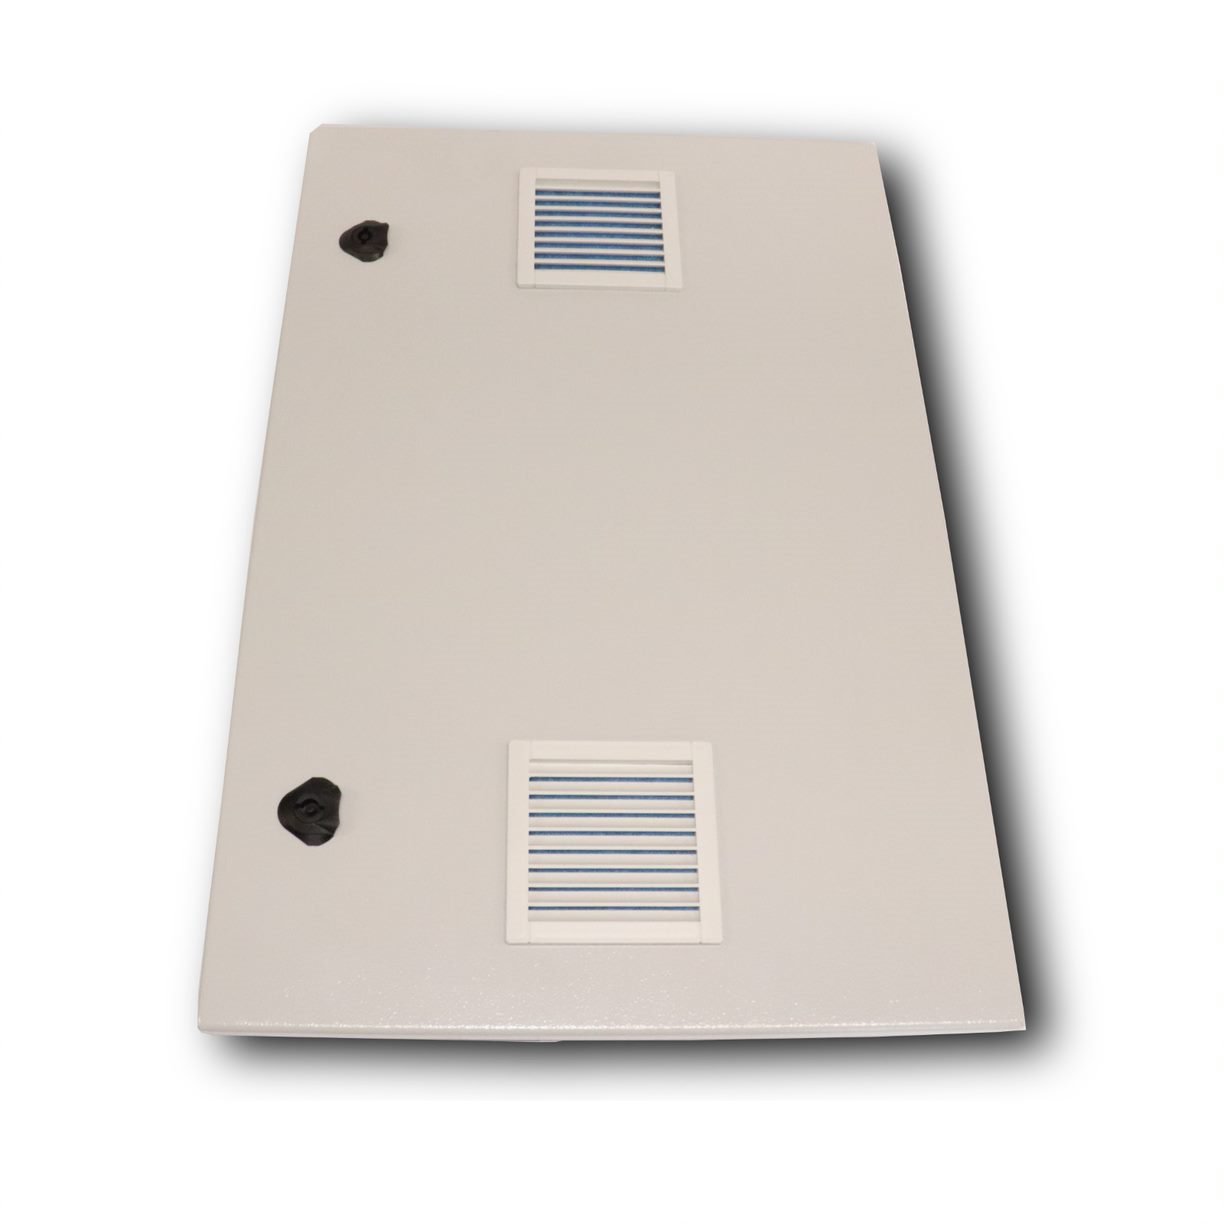 PSS* Compact Outdoor Enclosure IP54 Vented Door For MSB.403020/25 (2 x Vent)